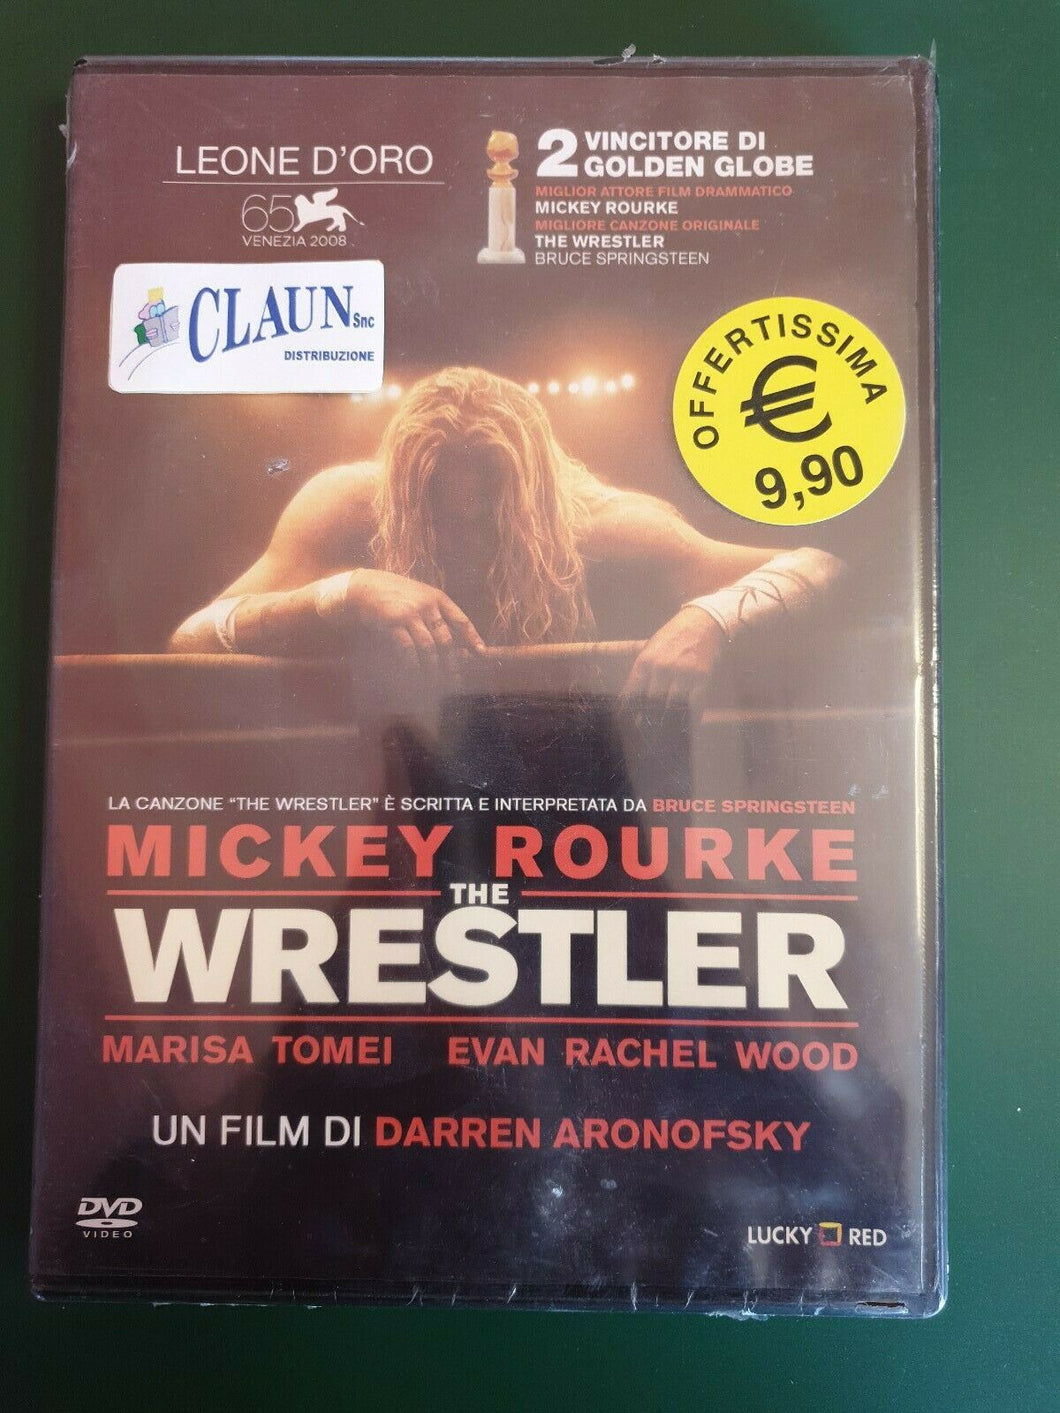 The Wrestler (2008) DVD Nuovo